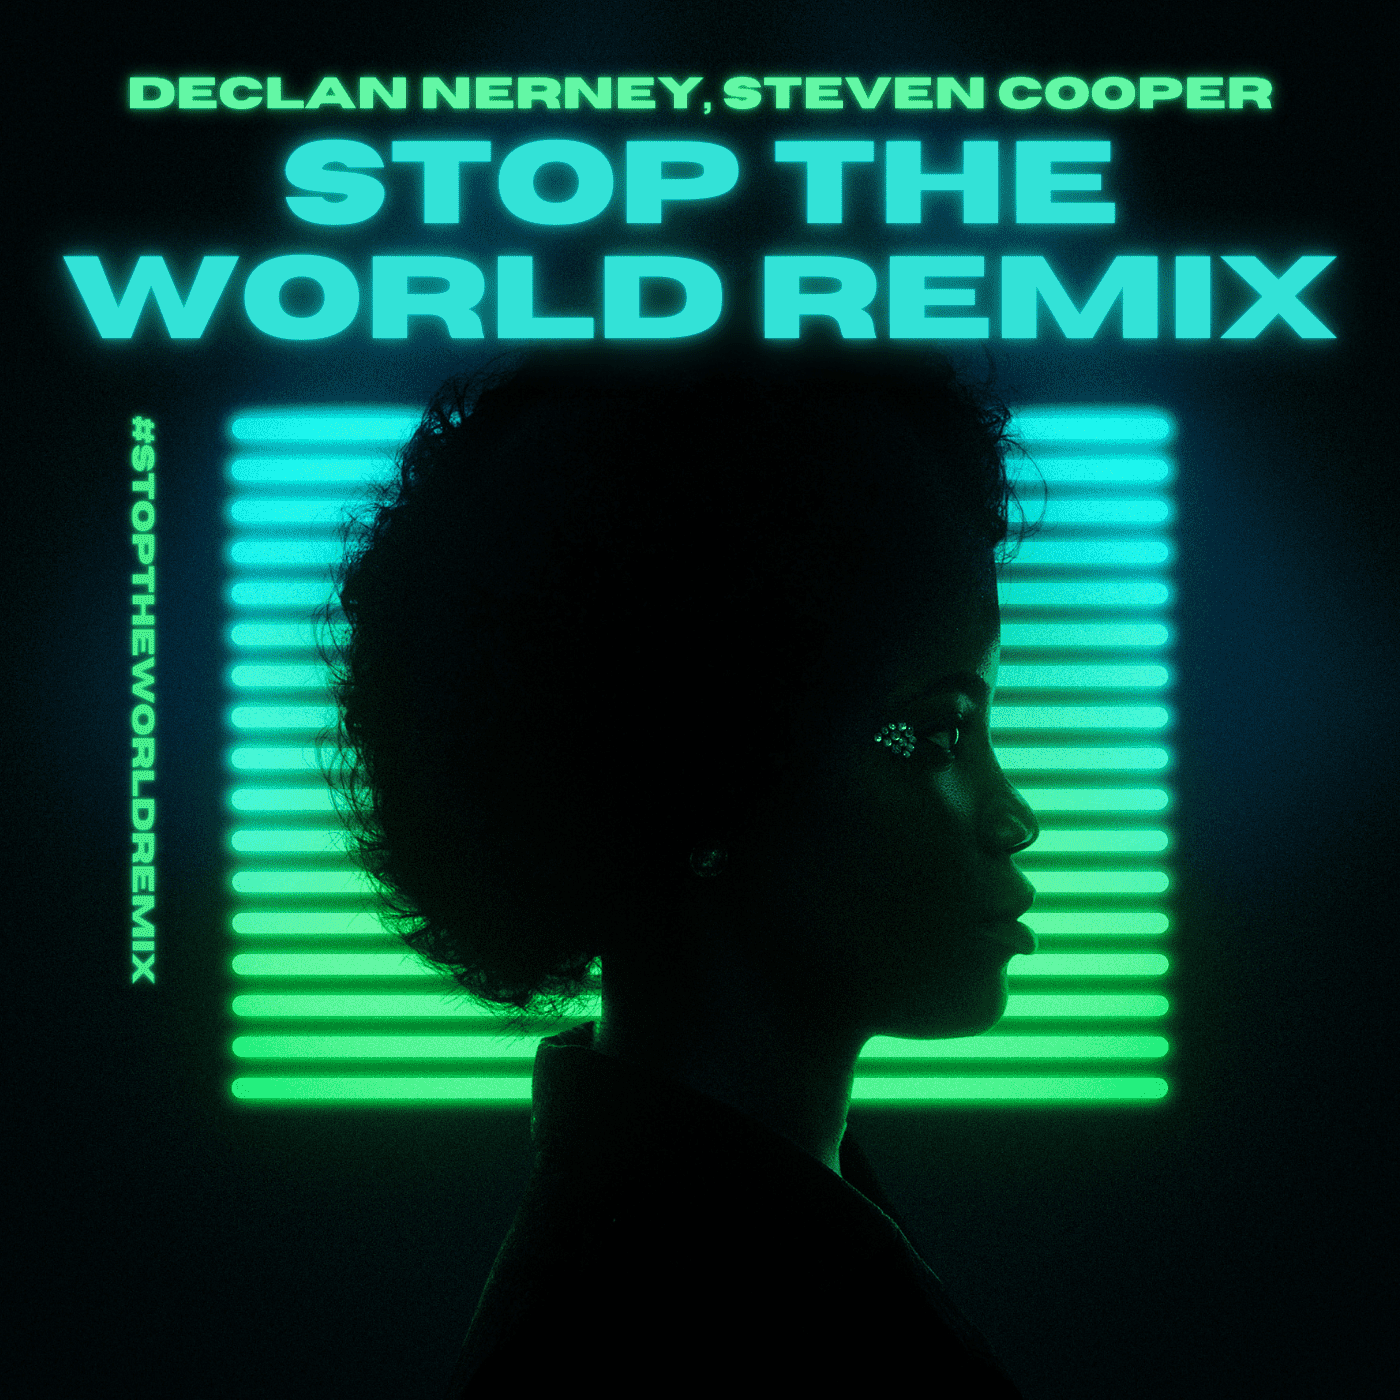 Declan Nerney, Steven Cooper 'Stop The World Remix'